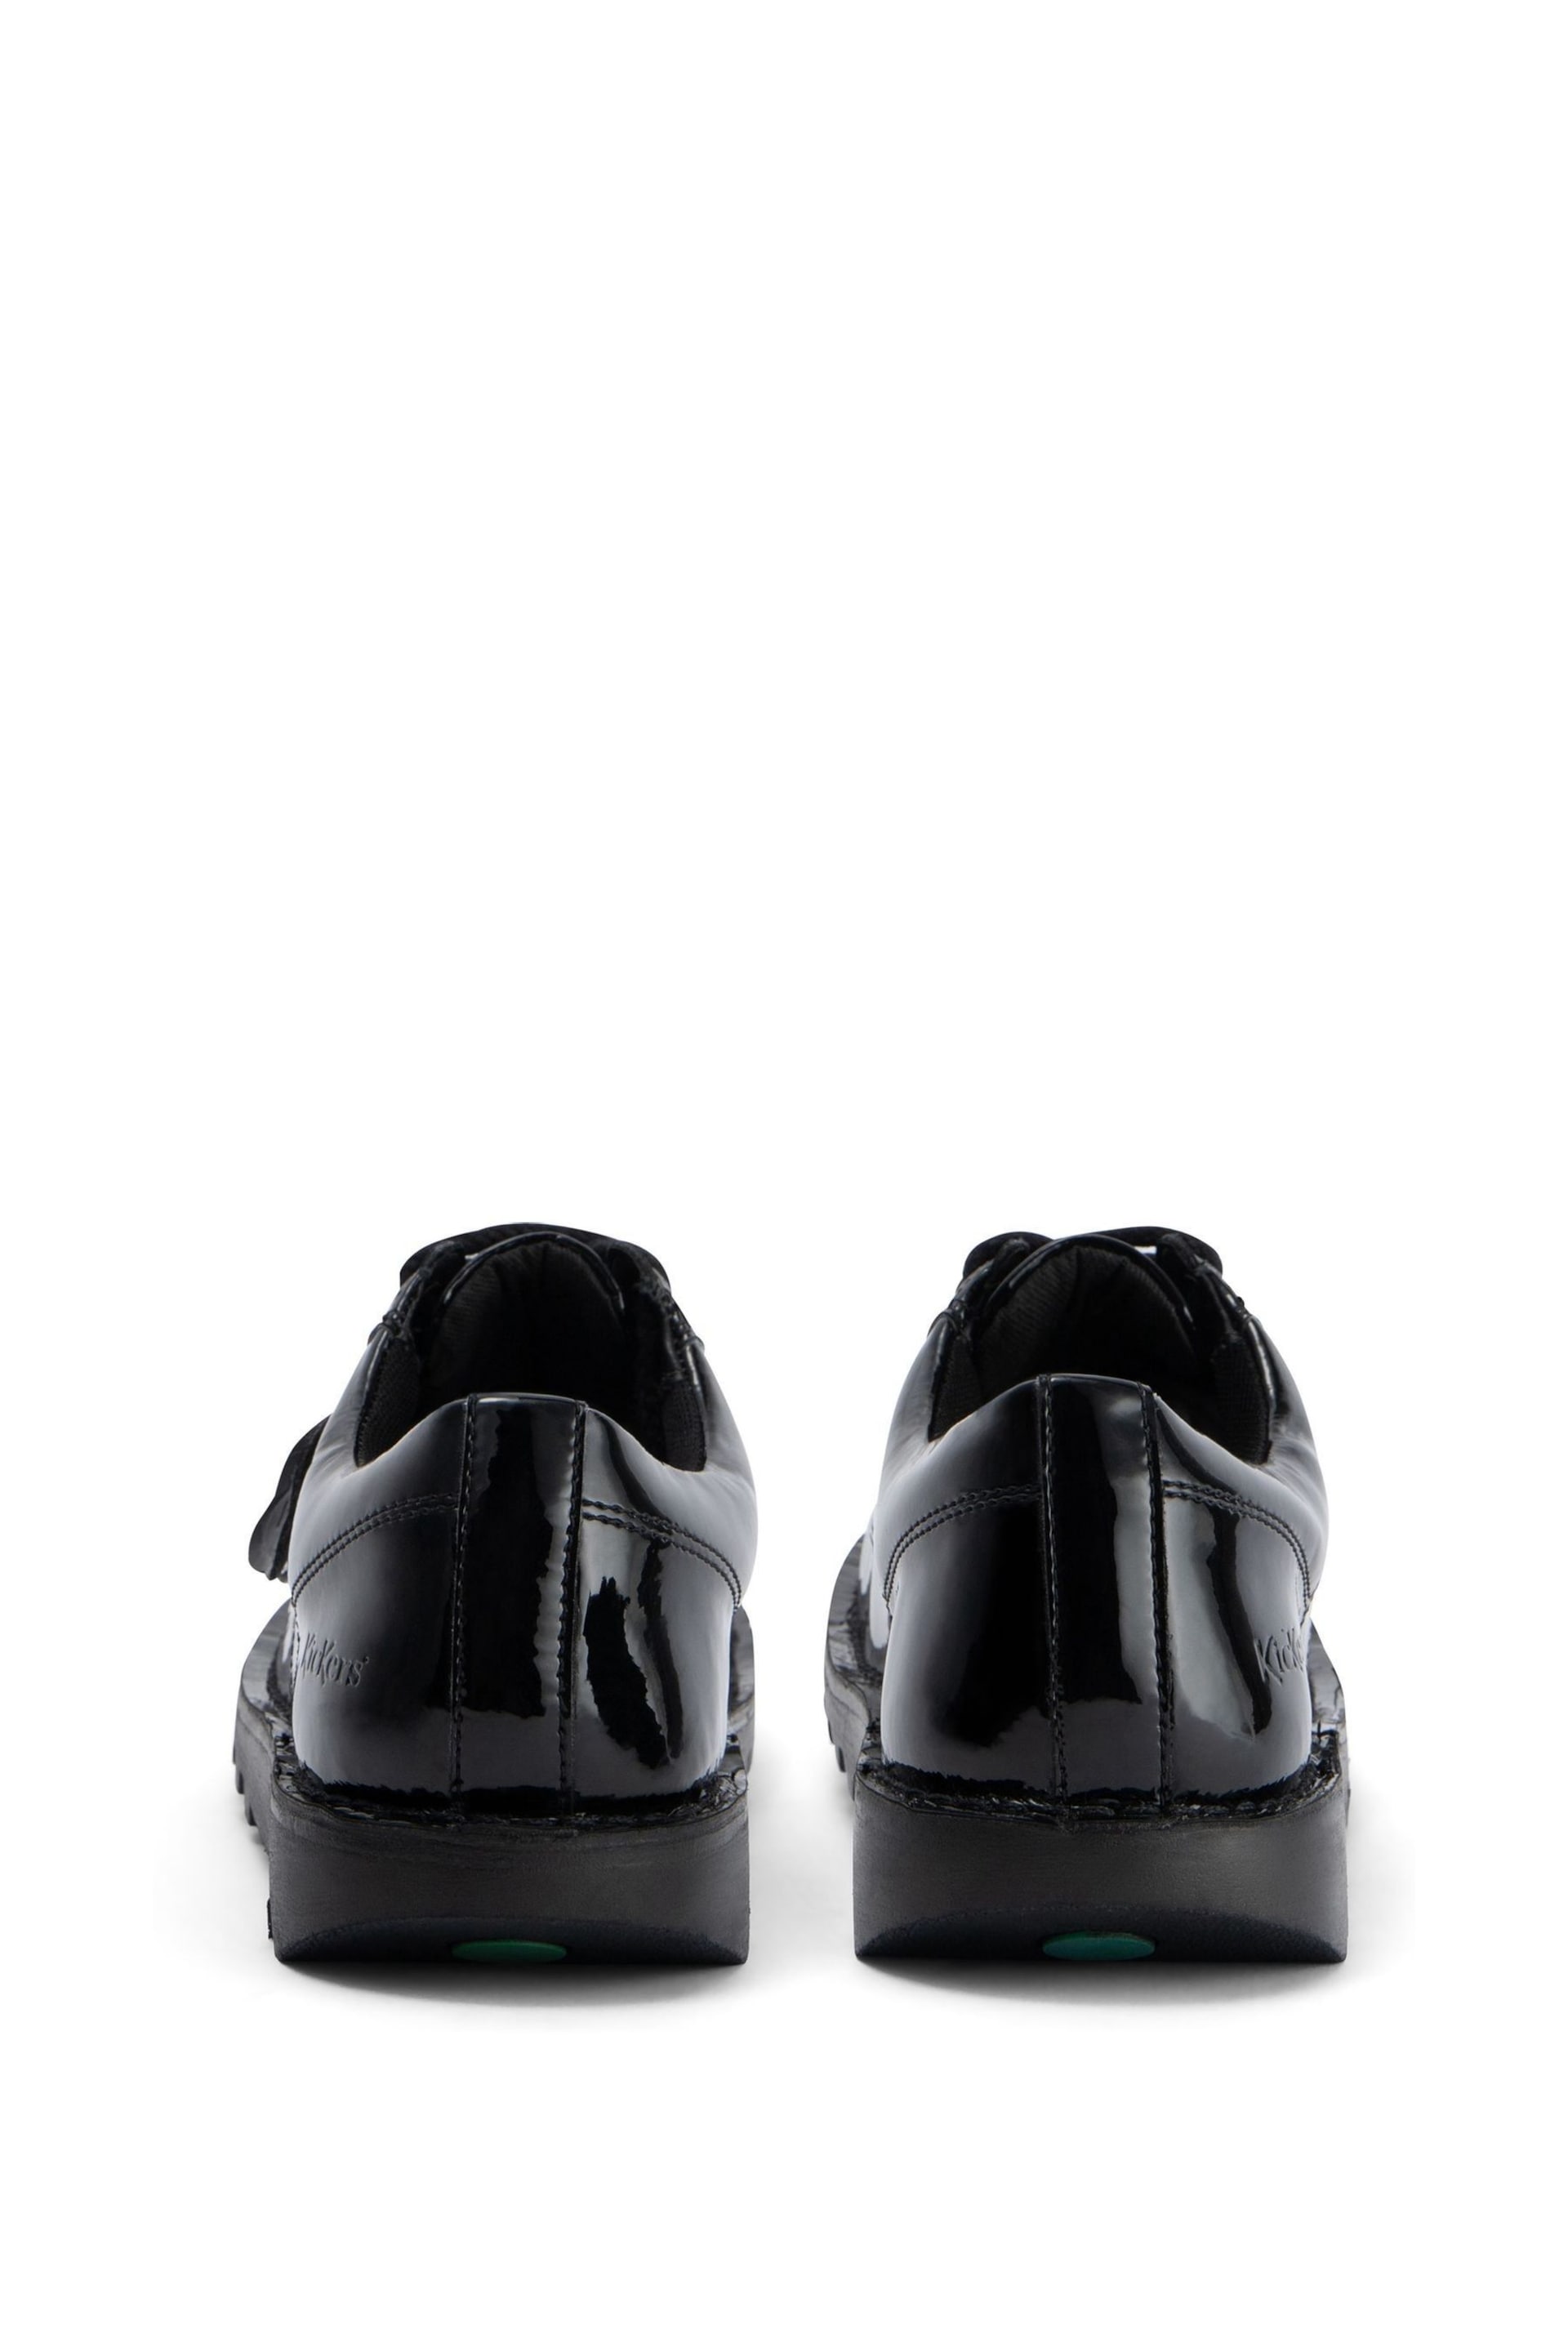 Kickers Kick Lo Vegan Patent Black Shoes - Image 5 of 6